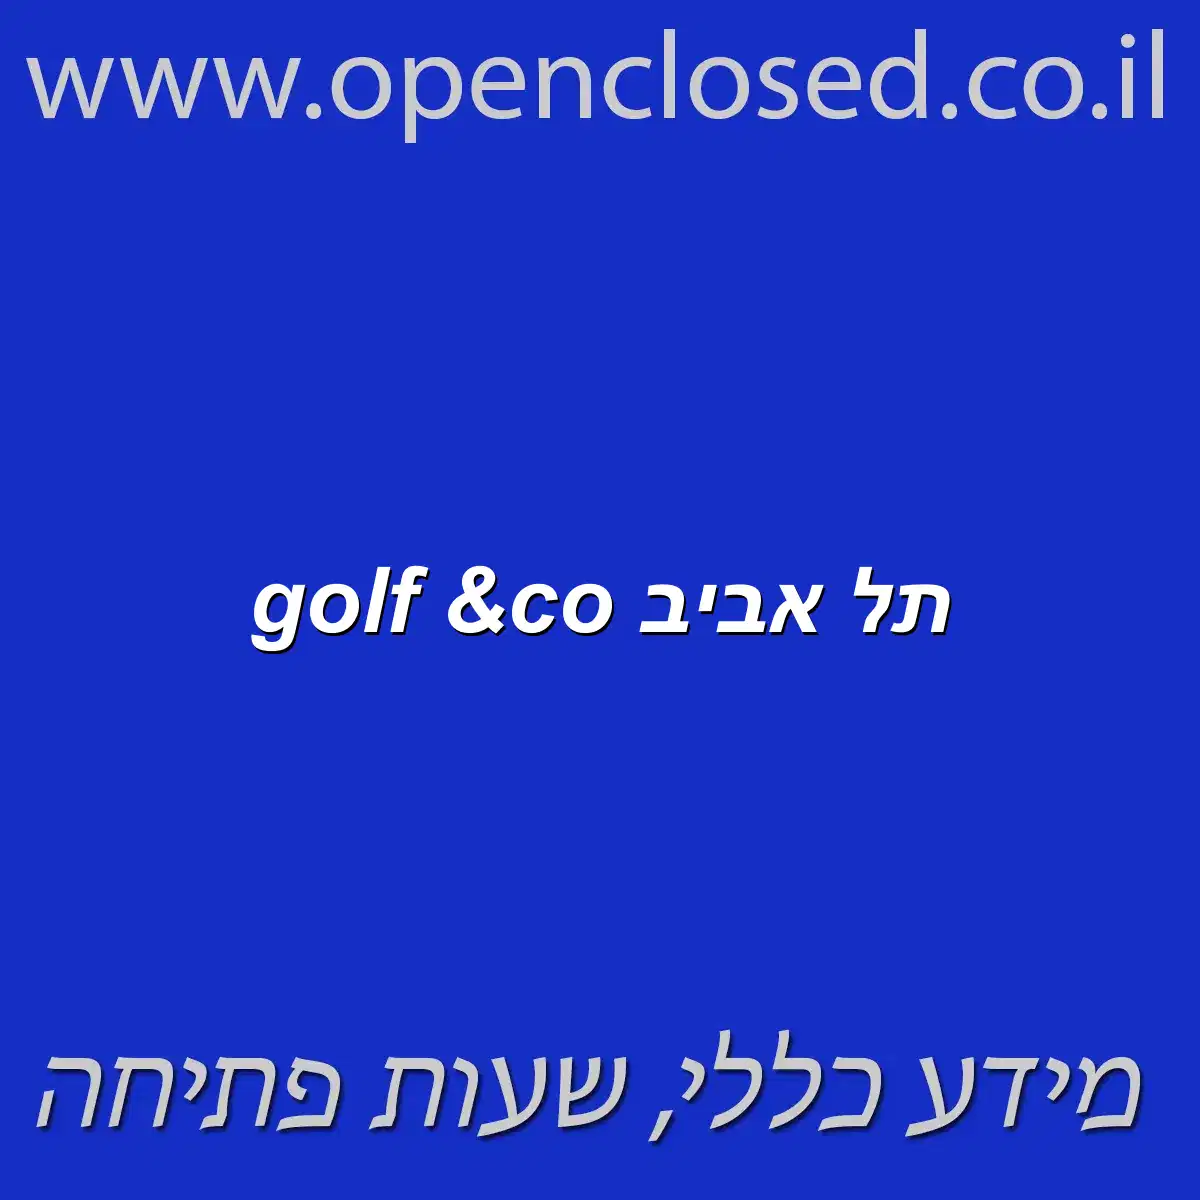 golf &co תל אביב